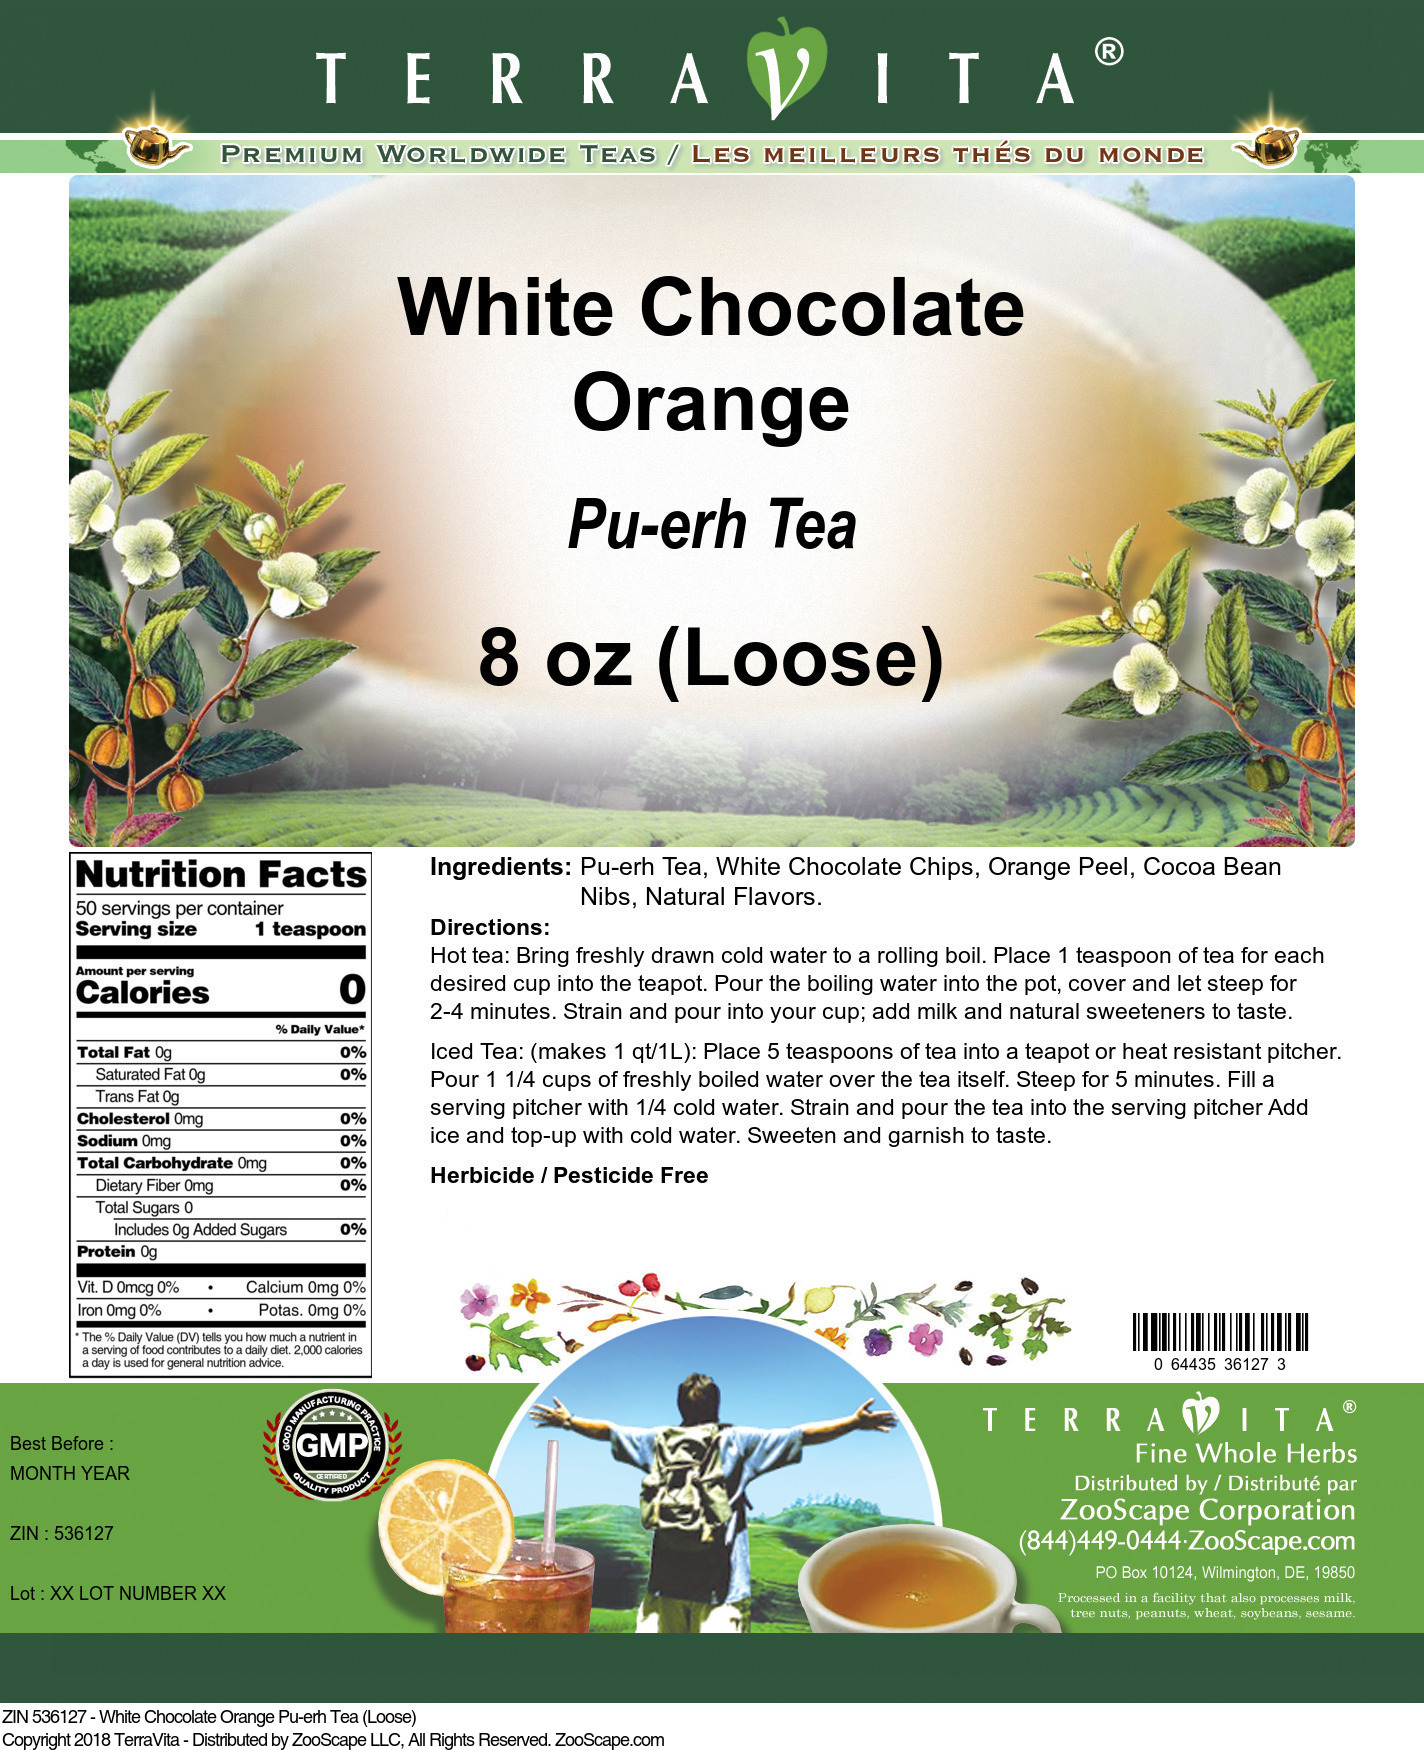 White Chocolate Orange Pu-erh Tea (Loose) - Label